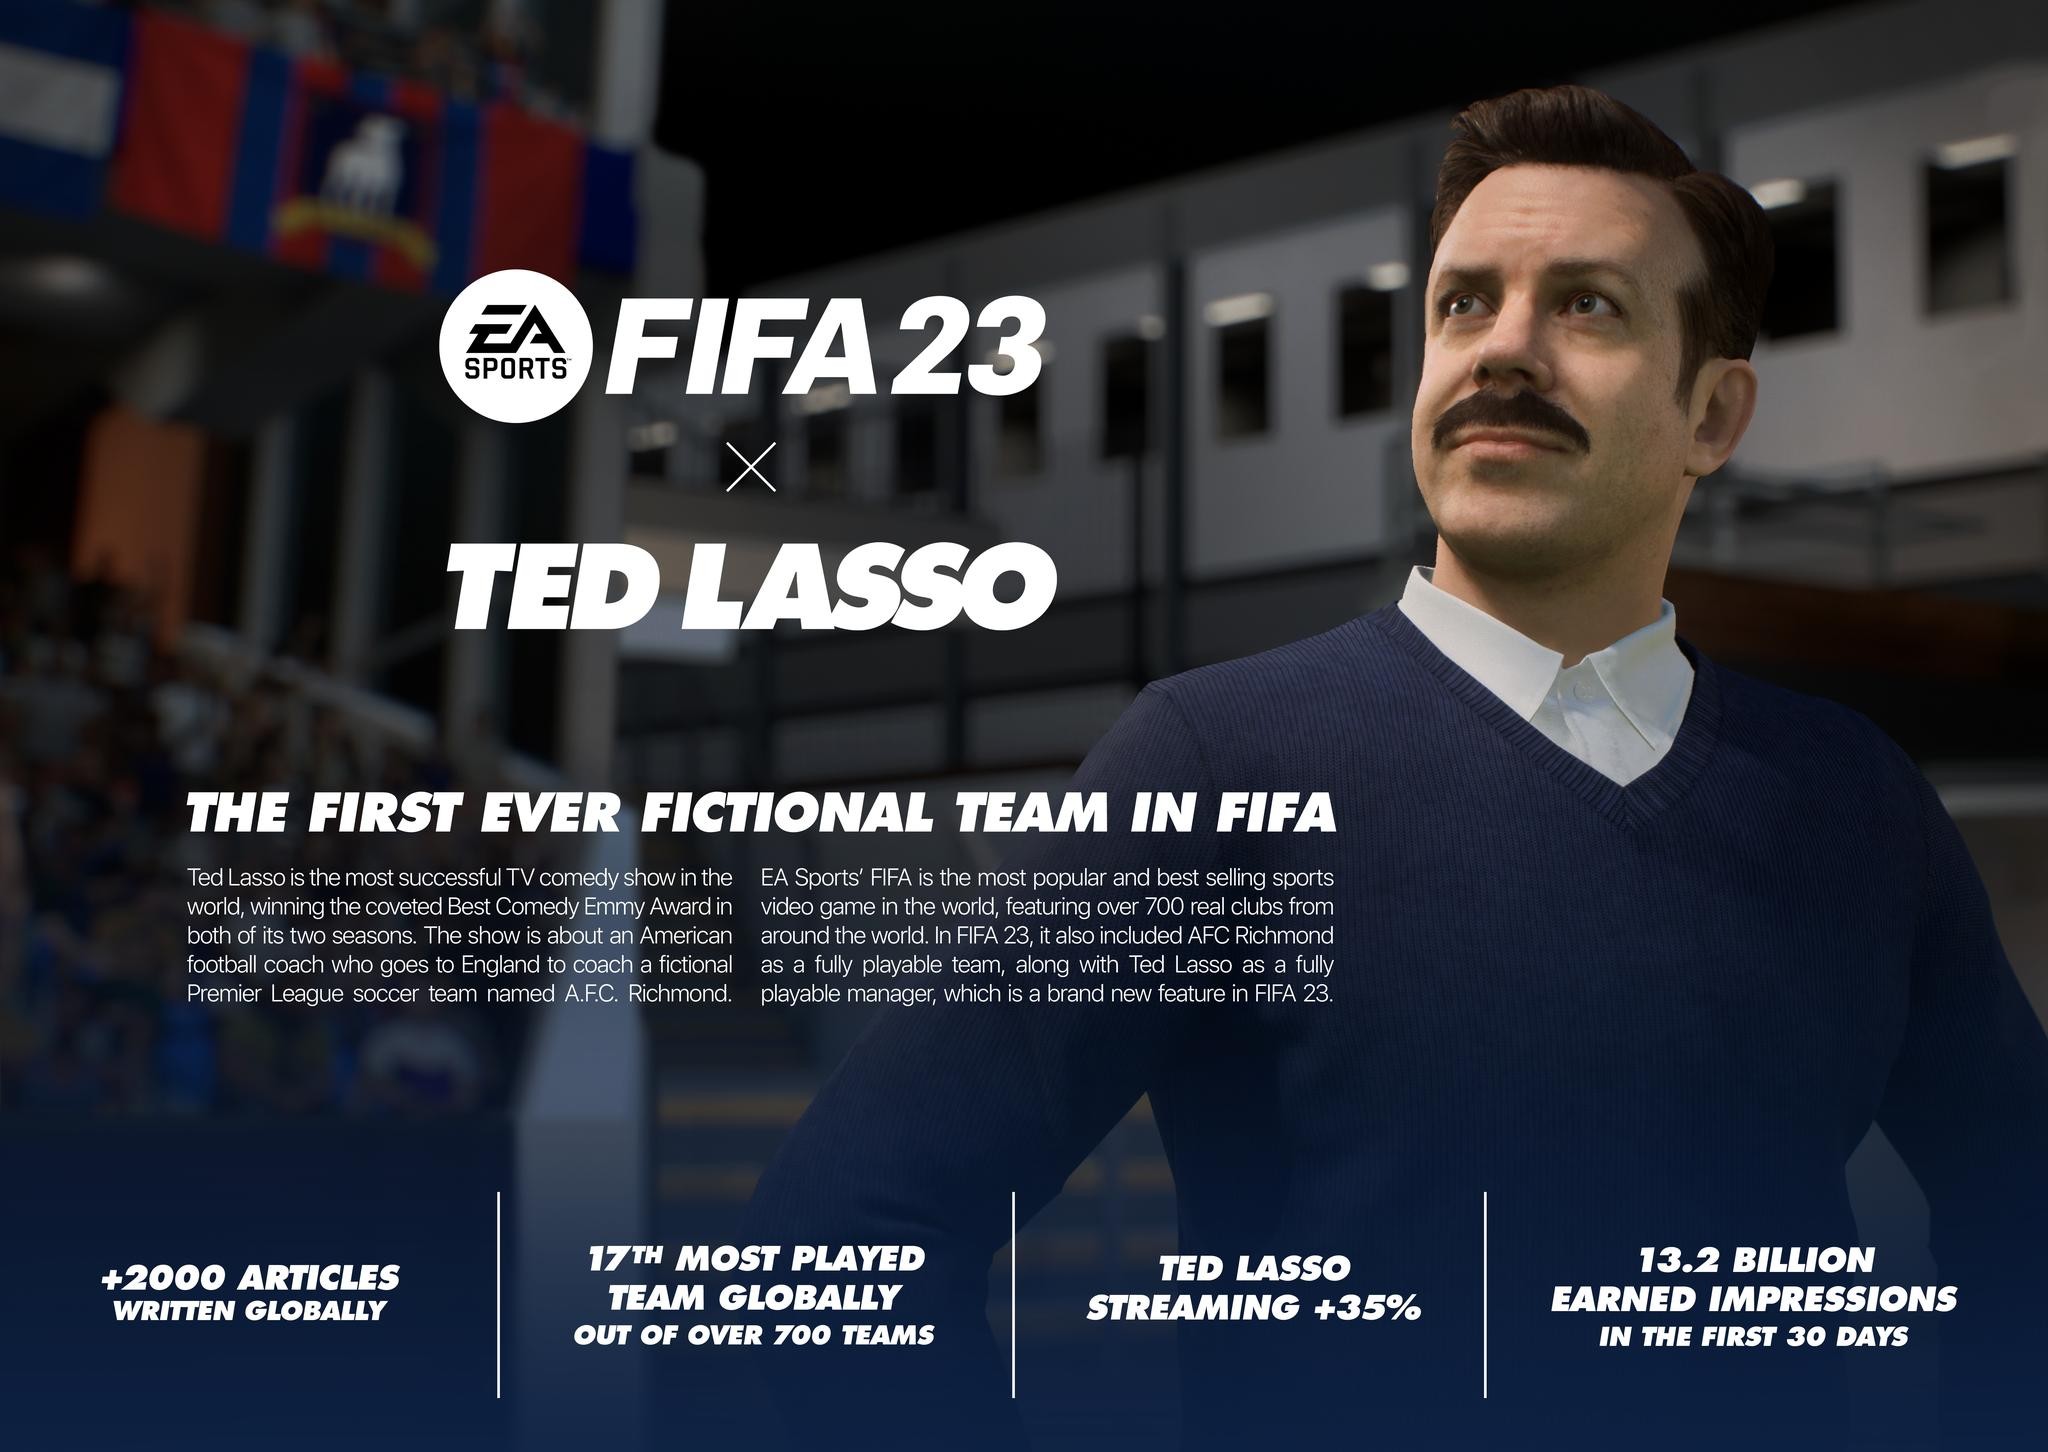 FIFA 23 X TED LASSO